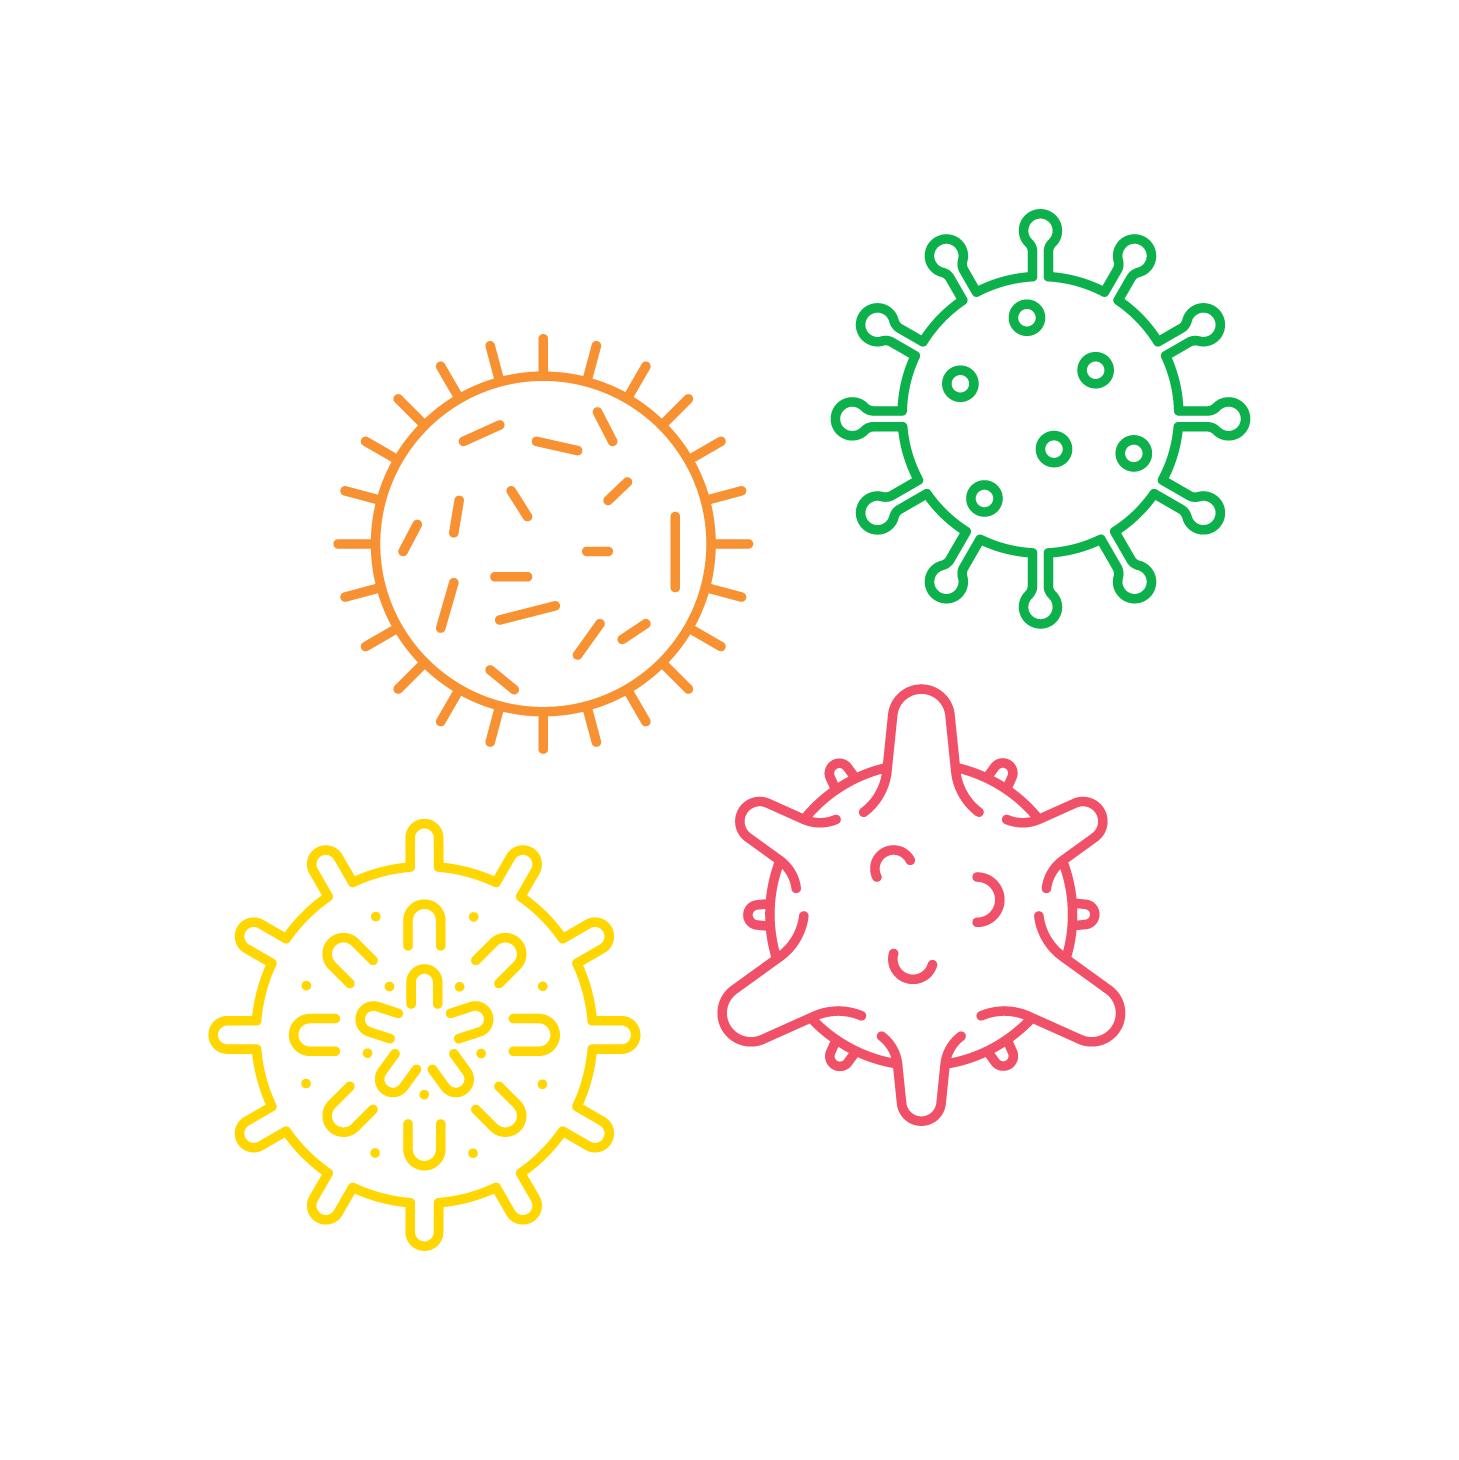 Image of four virus